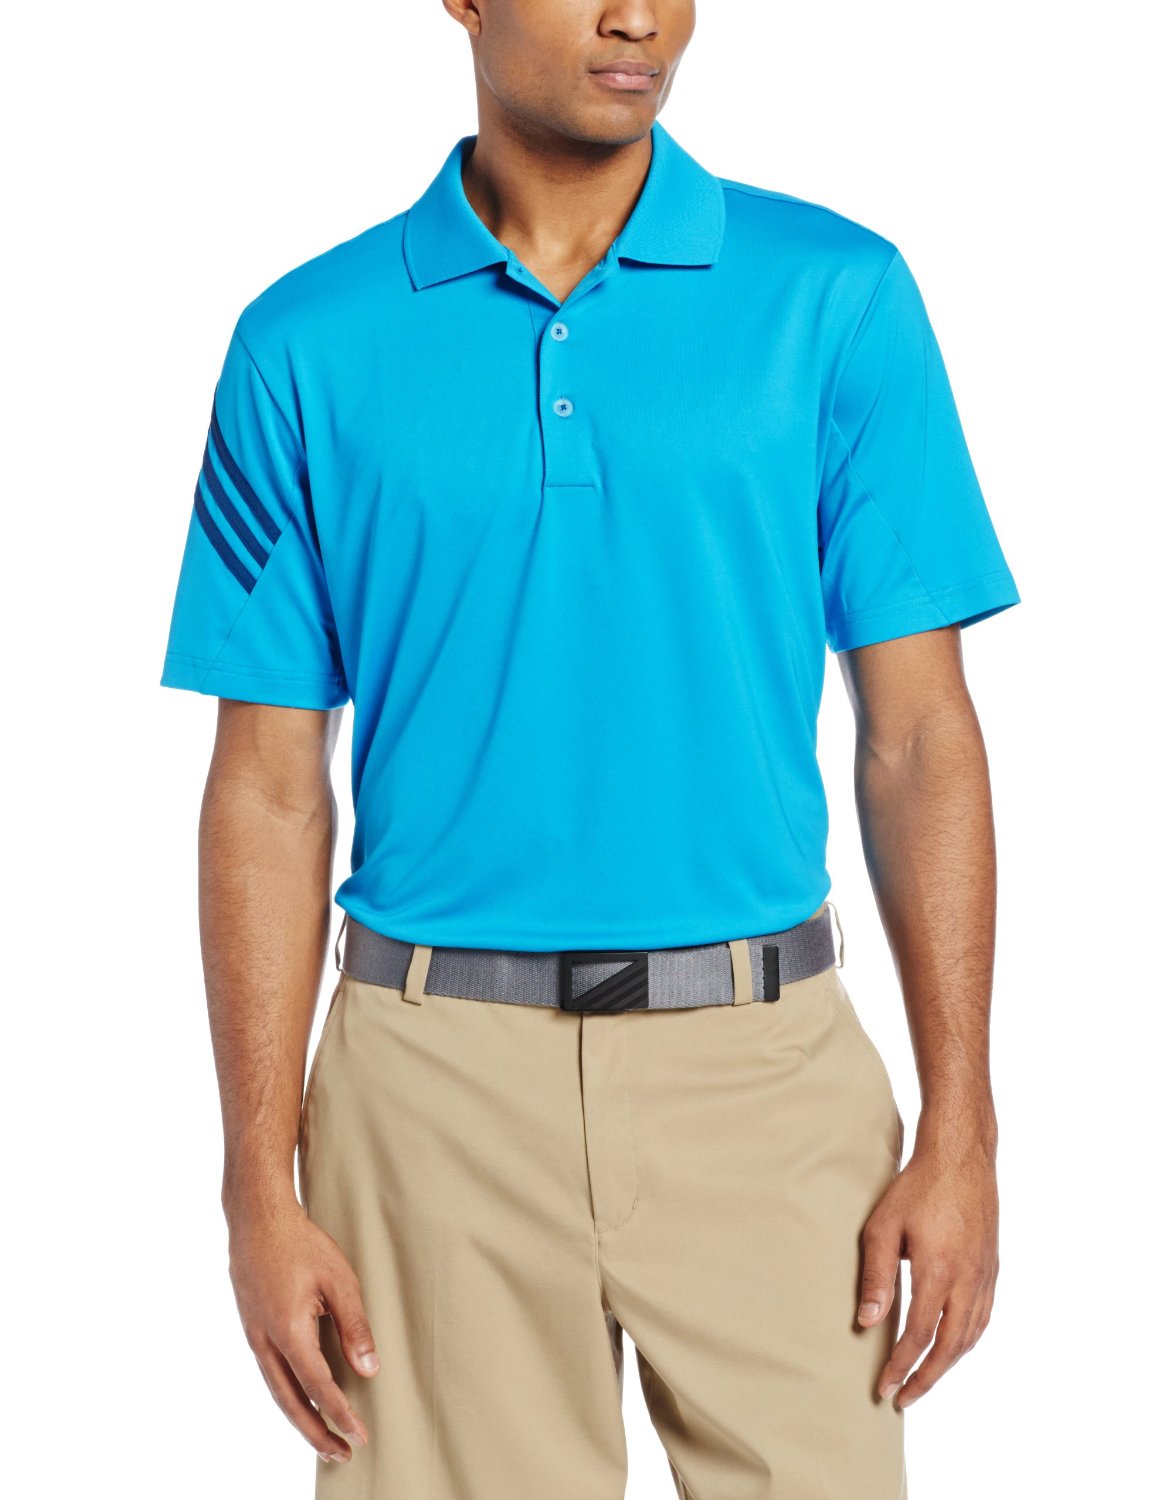 Adidas Mens Puremotion Climacool 3 Stripes Sleeve Golf Shirts